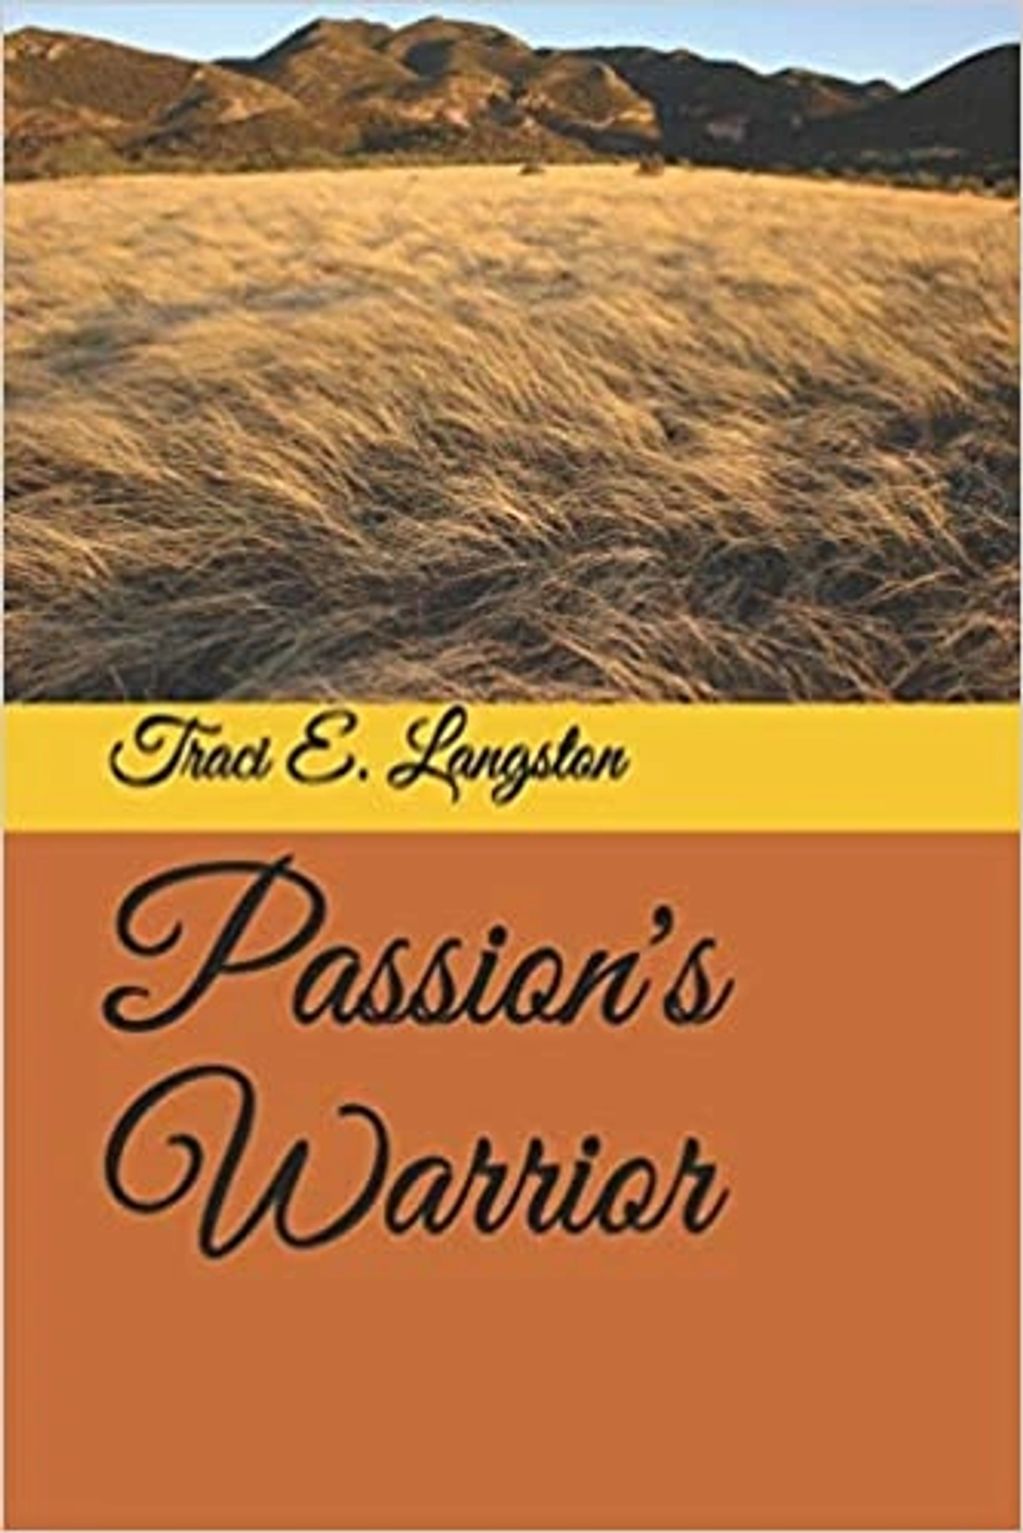 Passion's Warrior